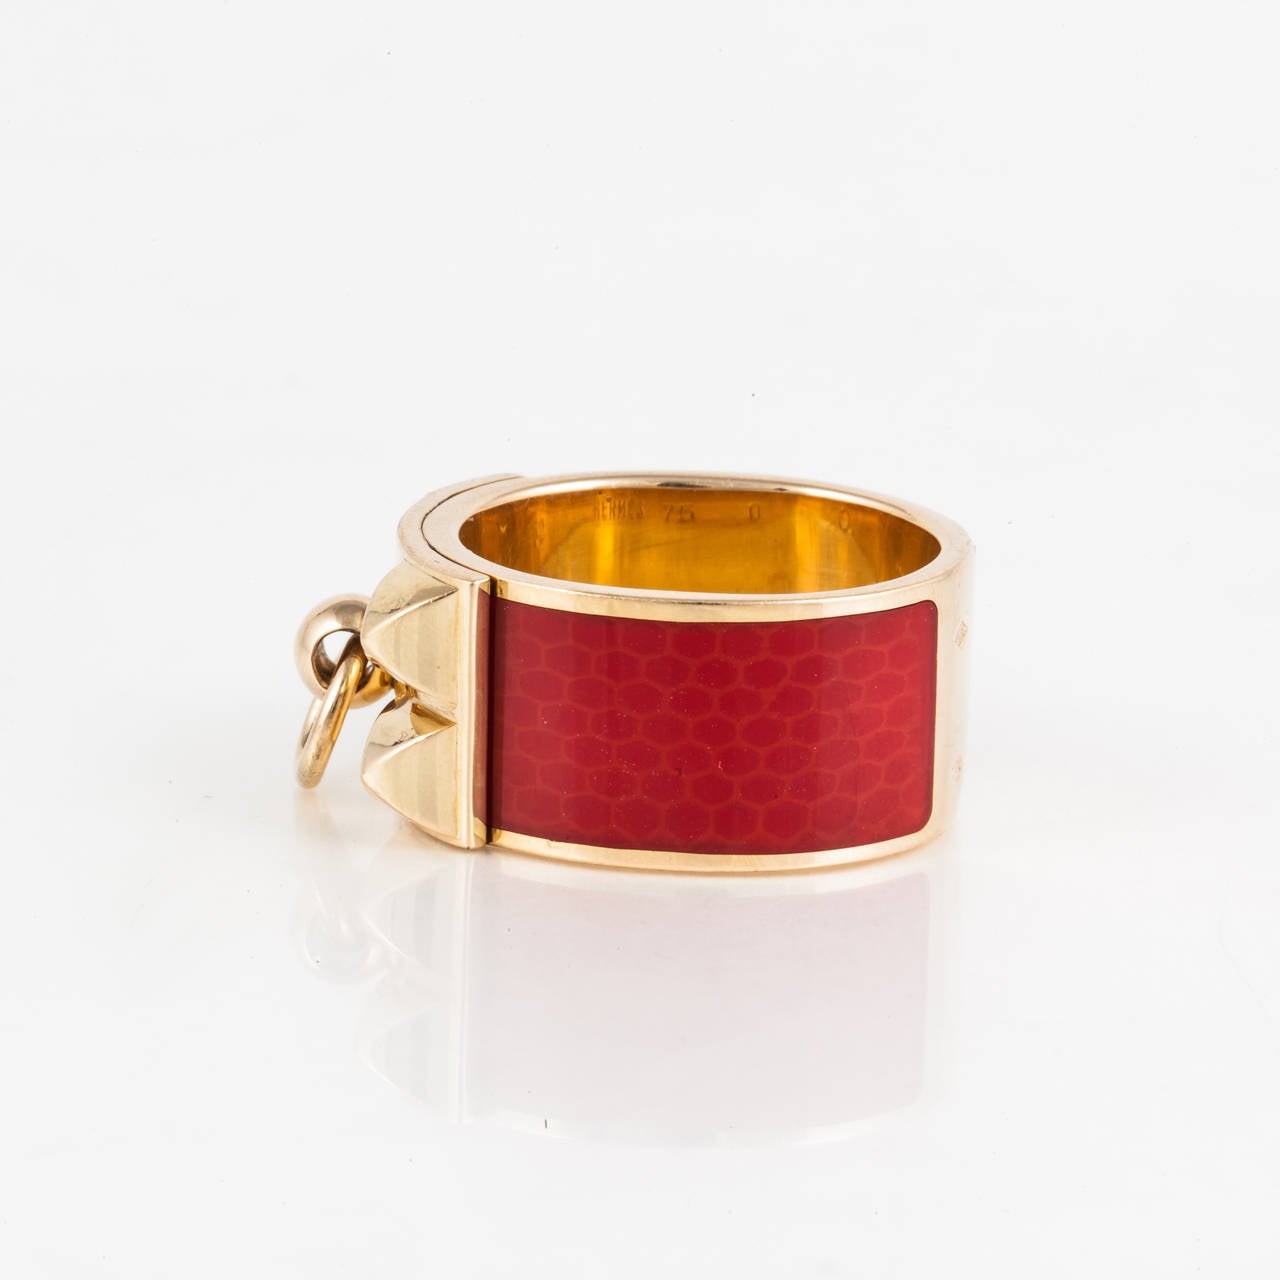 Hermes Collier De Chien Red Enamel Ring For Sale at 1stdibs